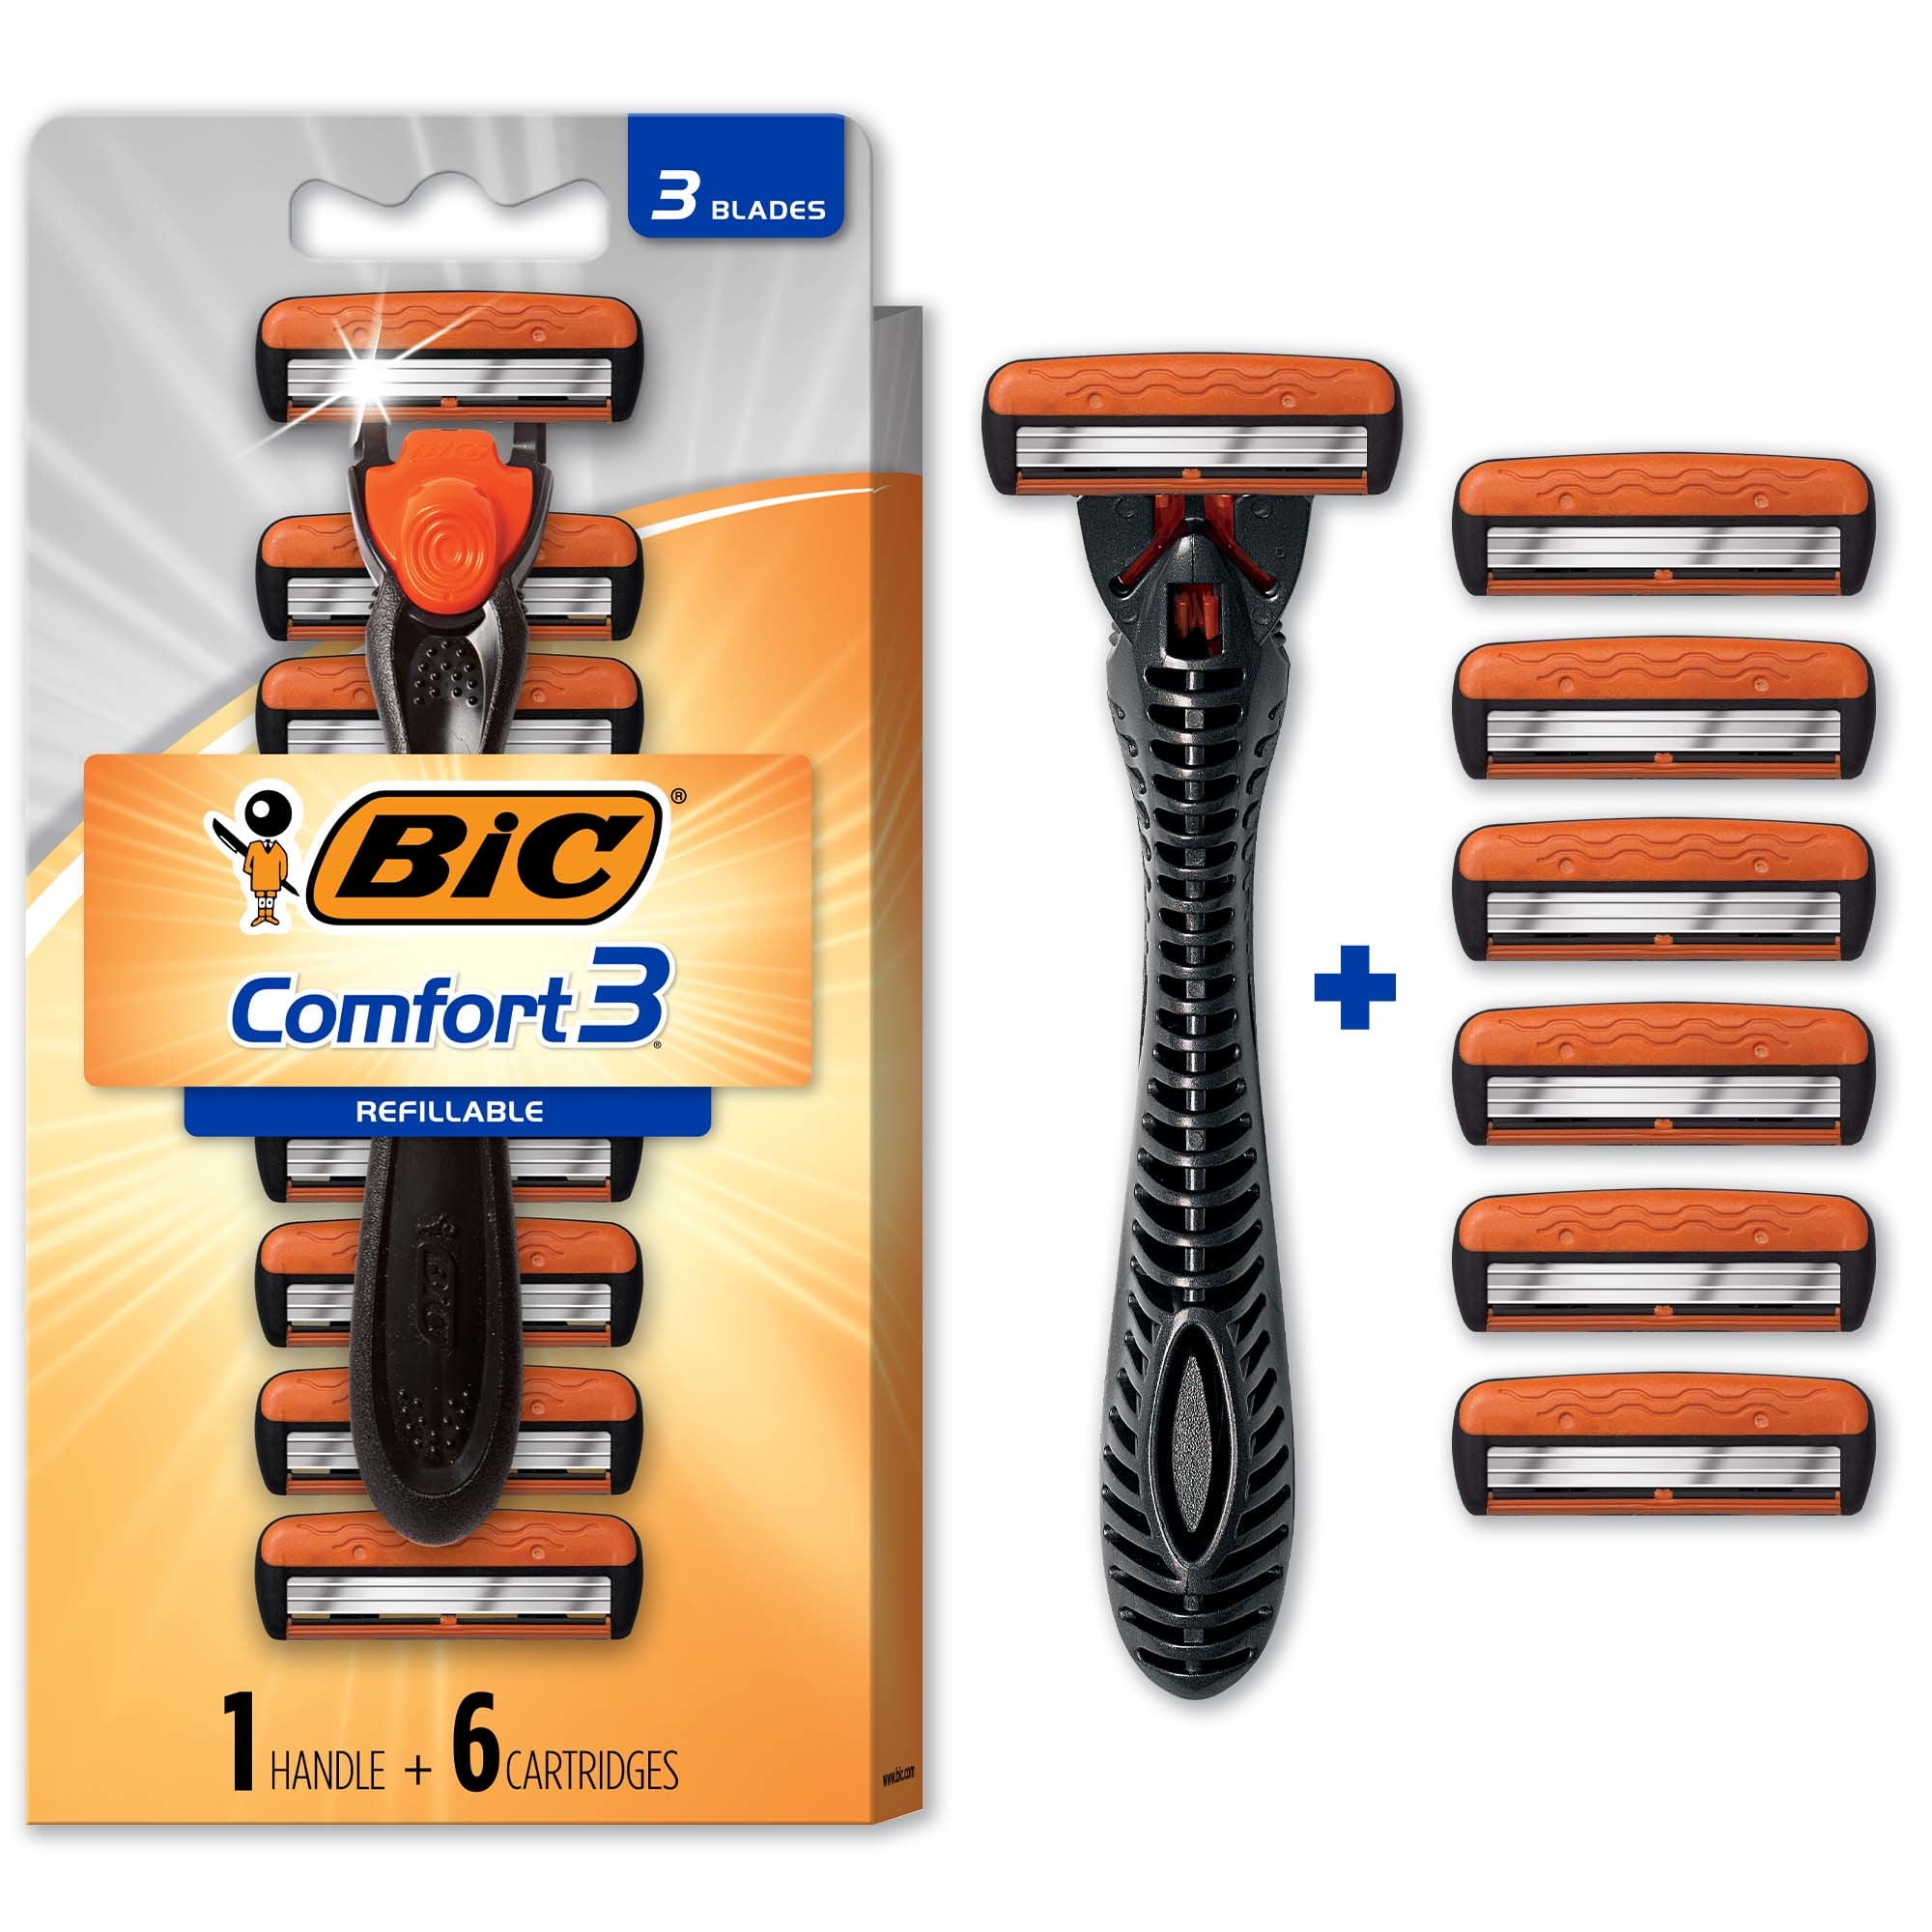 BIC Comfort 3 Hybrid Men's Disposable Razor, Sensitive Skin Razor, 1 Handle and 6 Cartridges